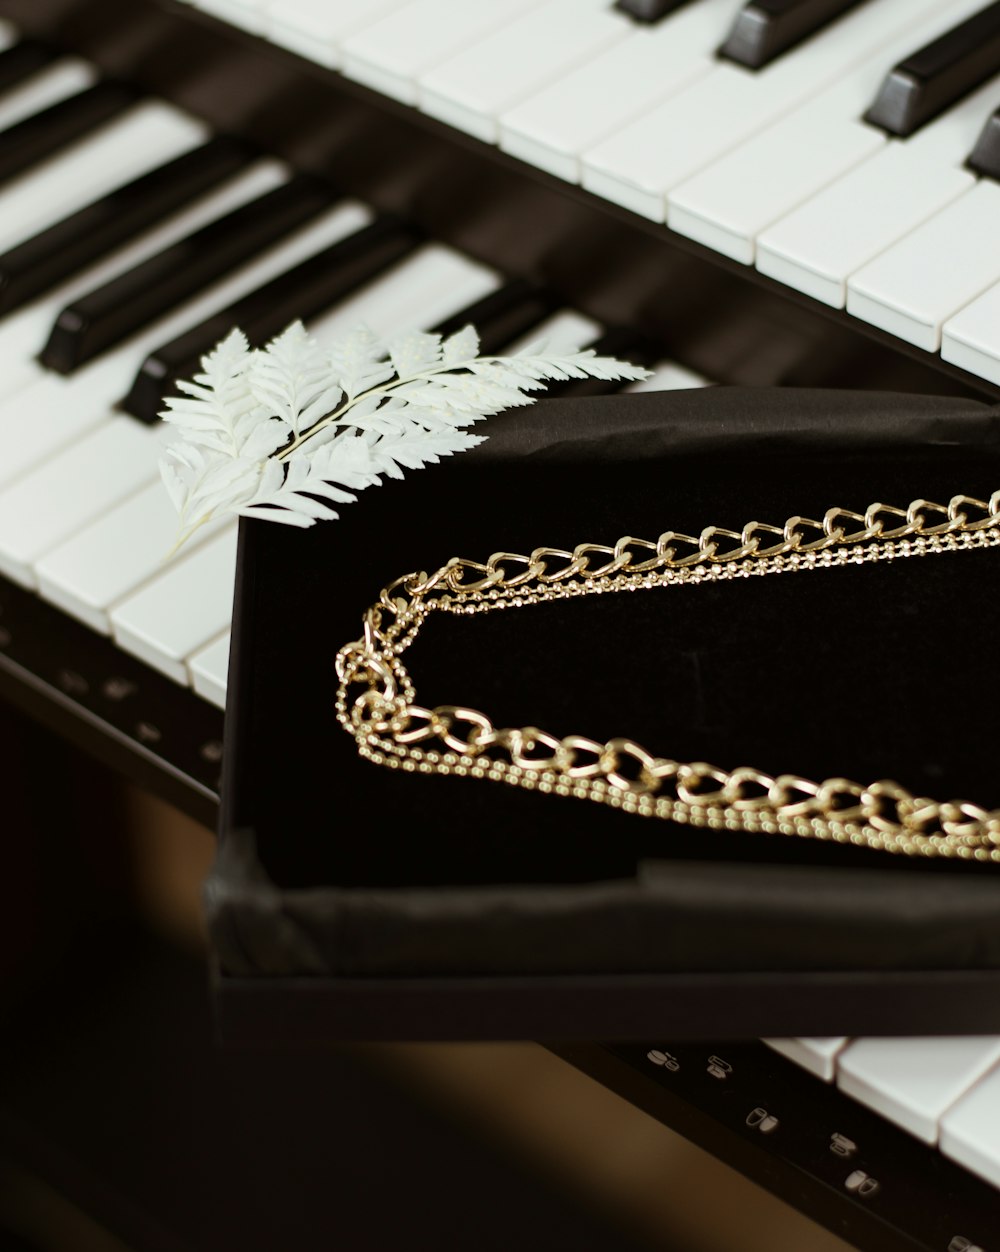 silver chain on piano keys